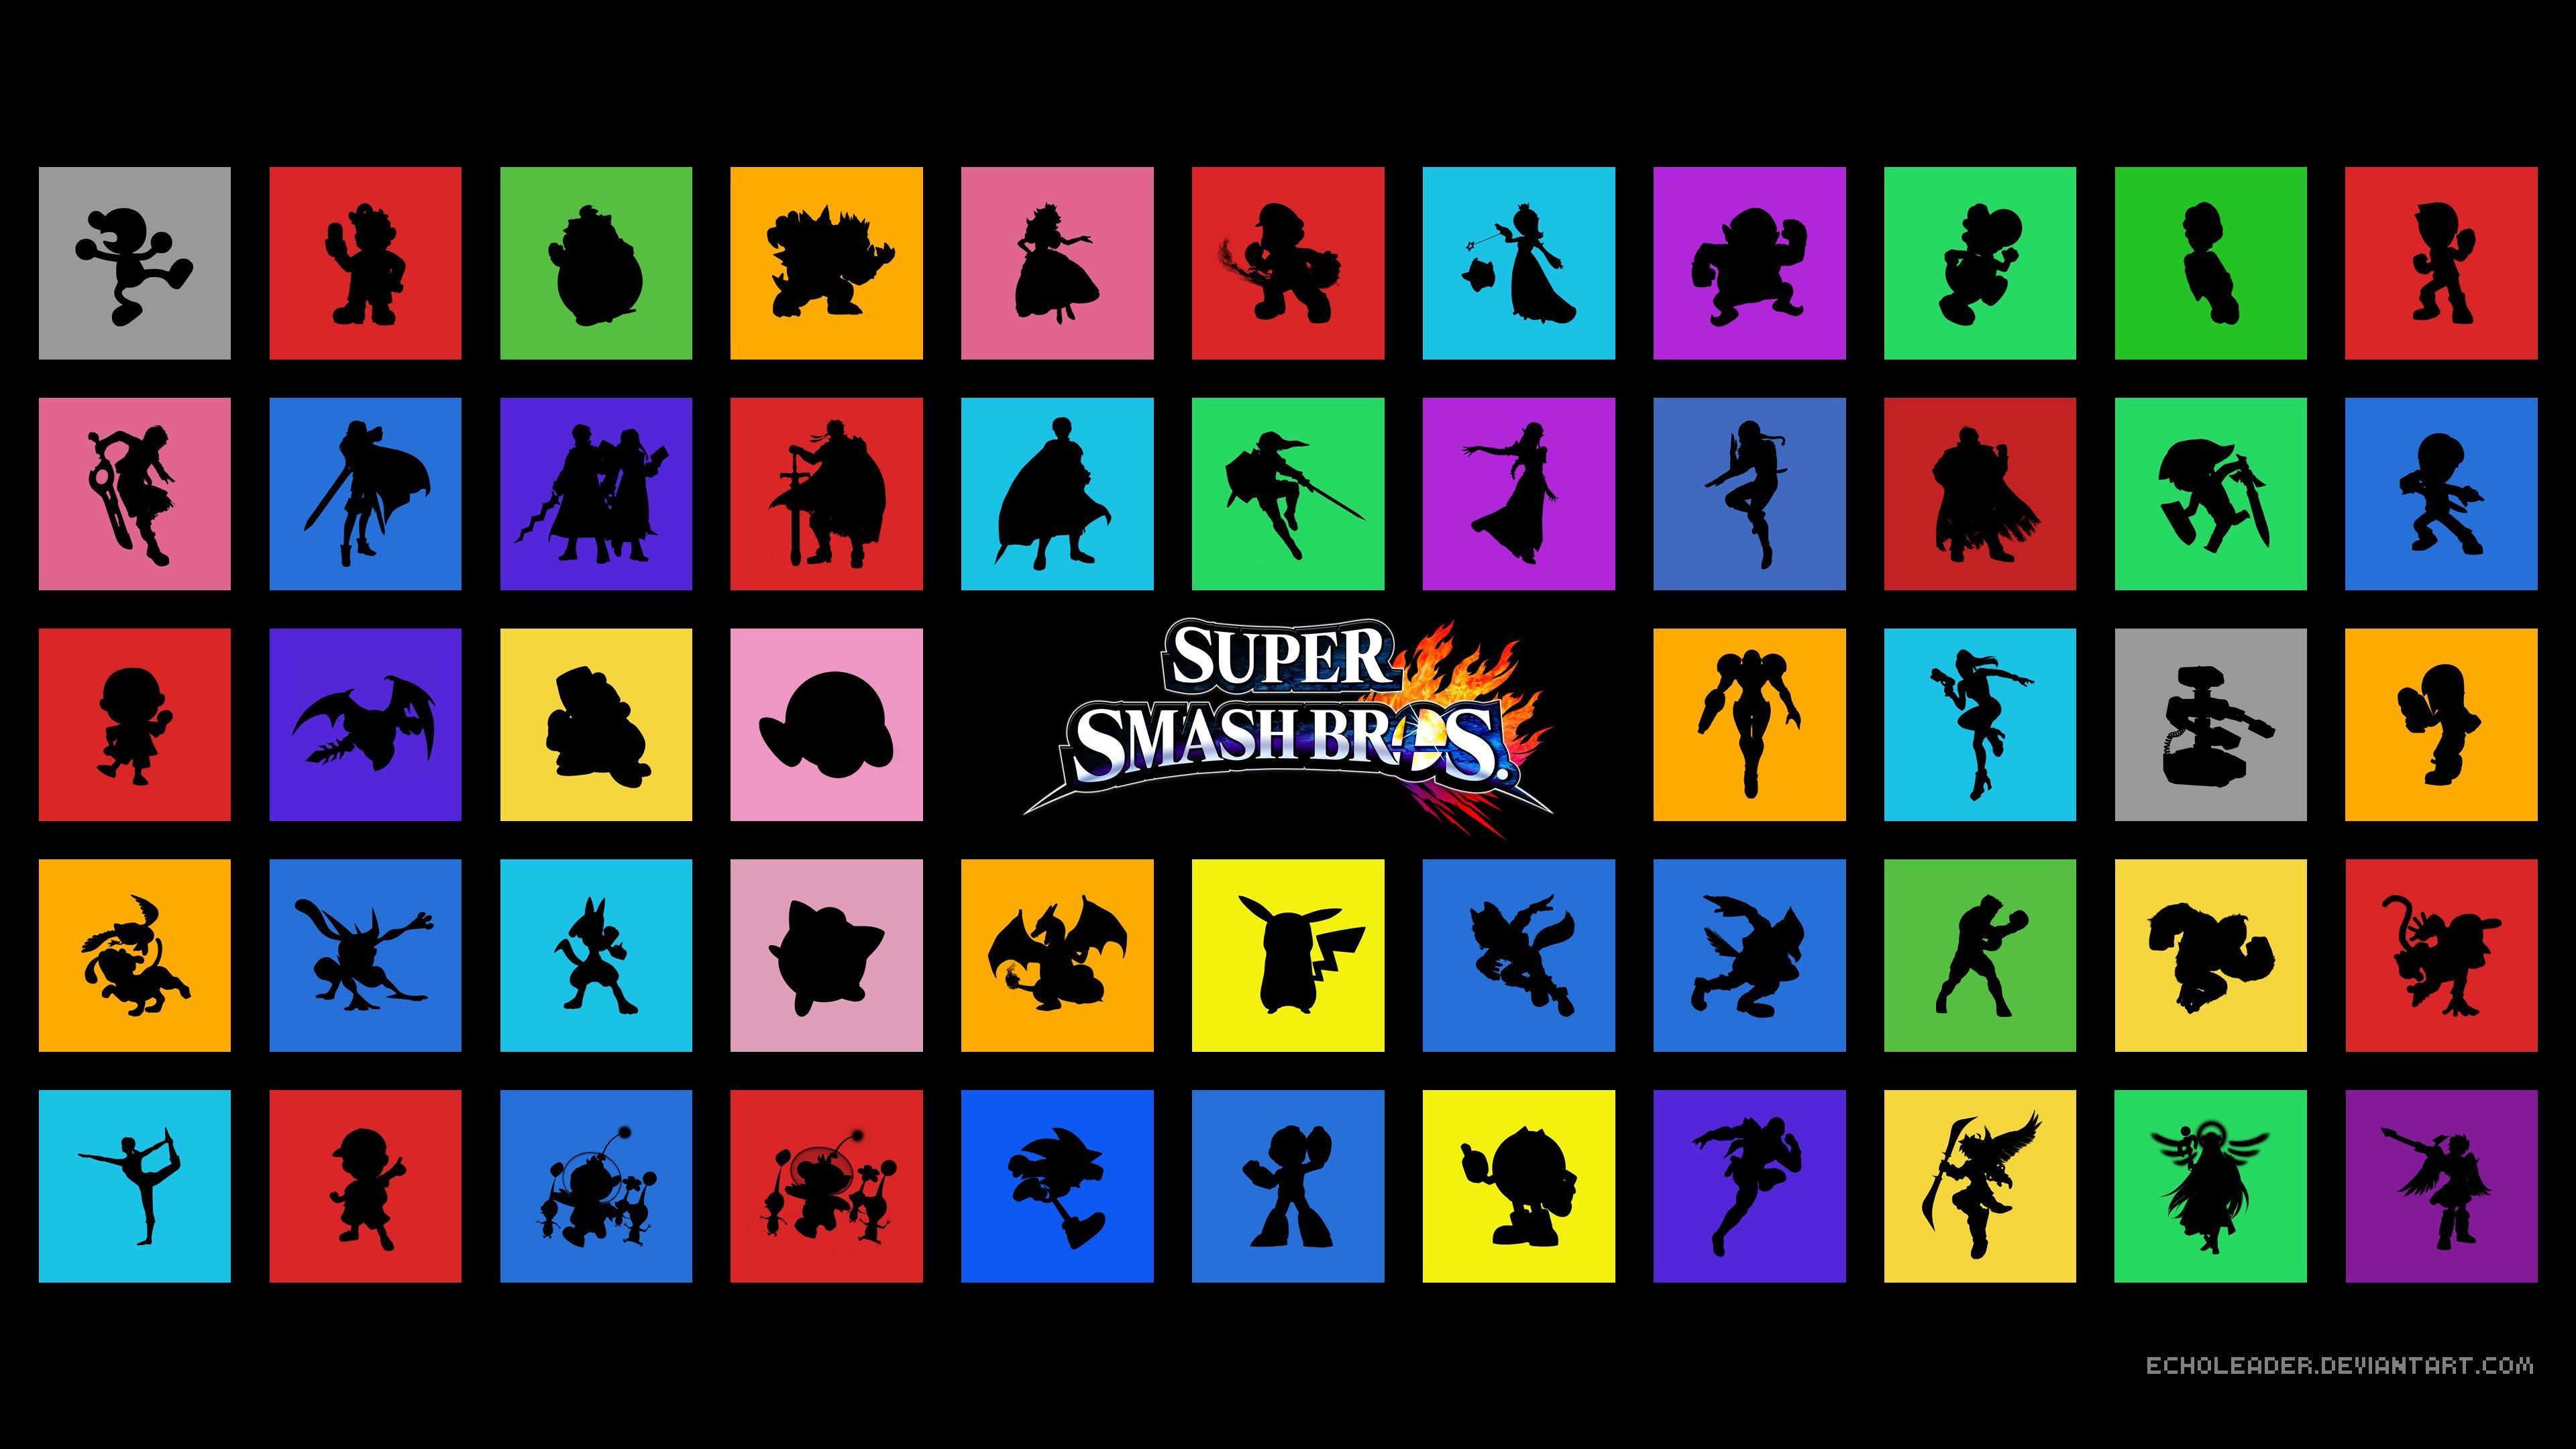 Super Smash Bros 4k Wallpapers Wallpaper Cave